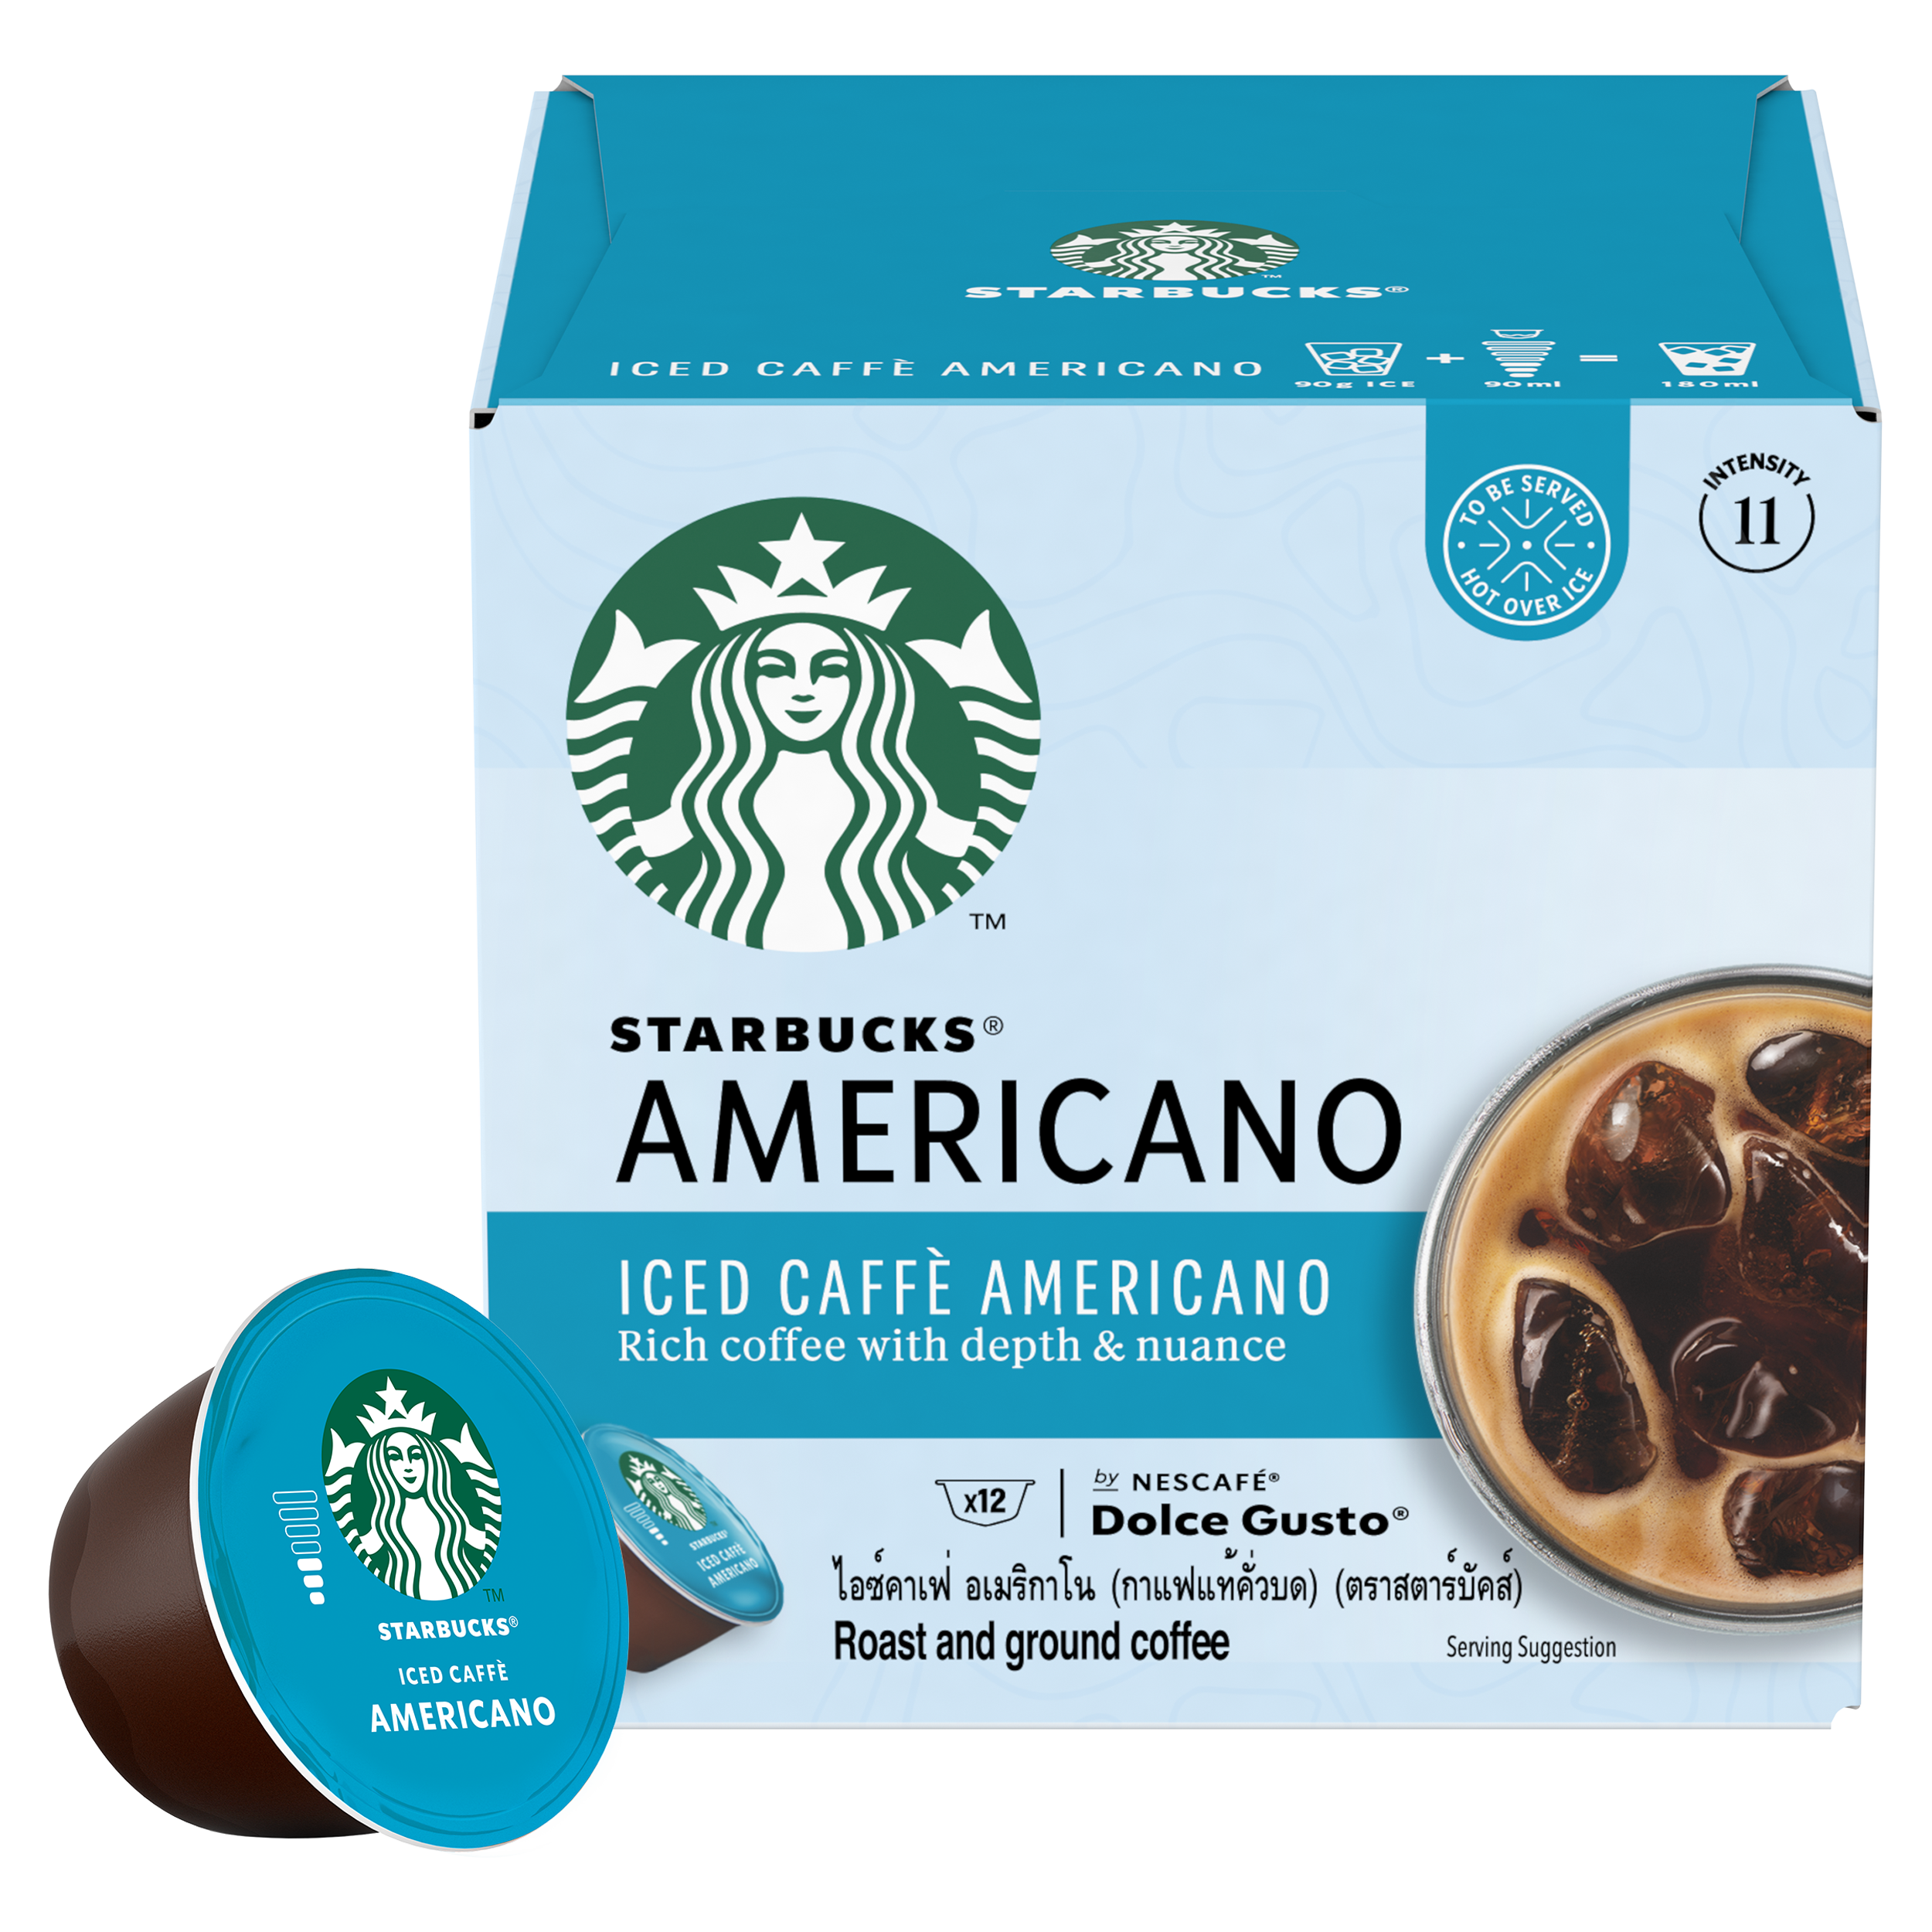 Coffee capsules Starbucks Dolce Gusto Espresso House Blend - box